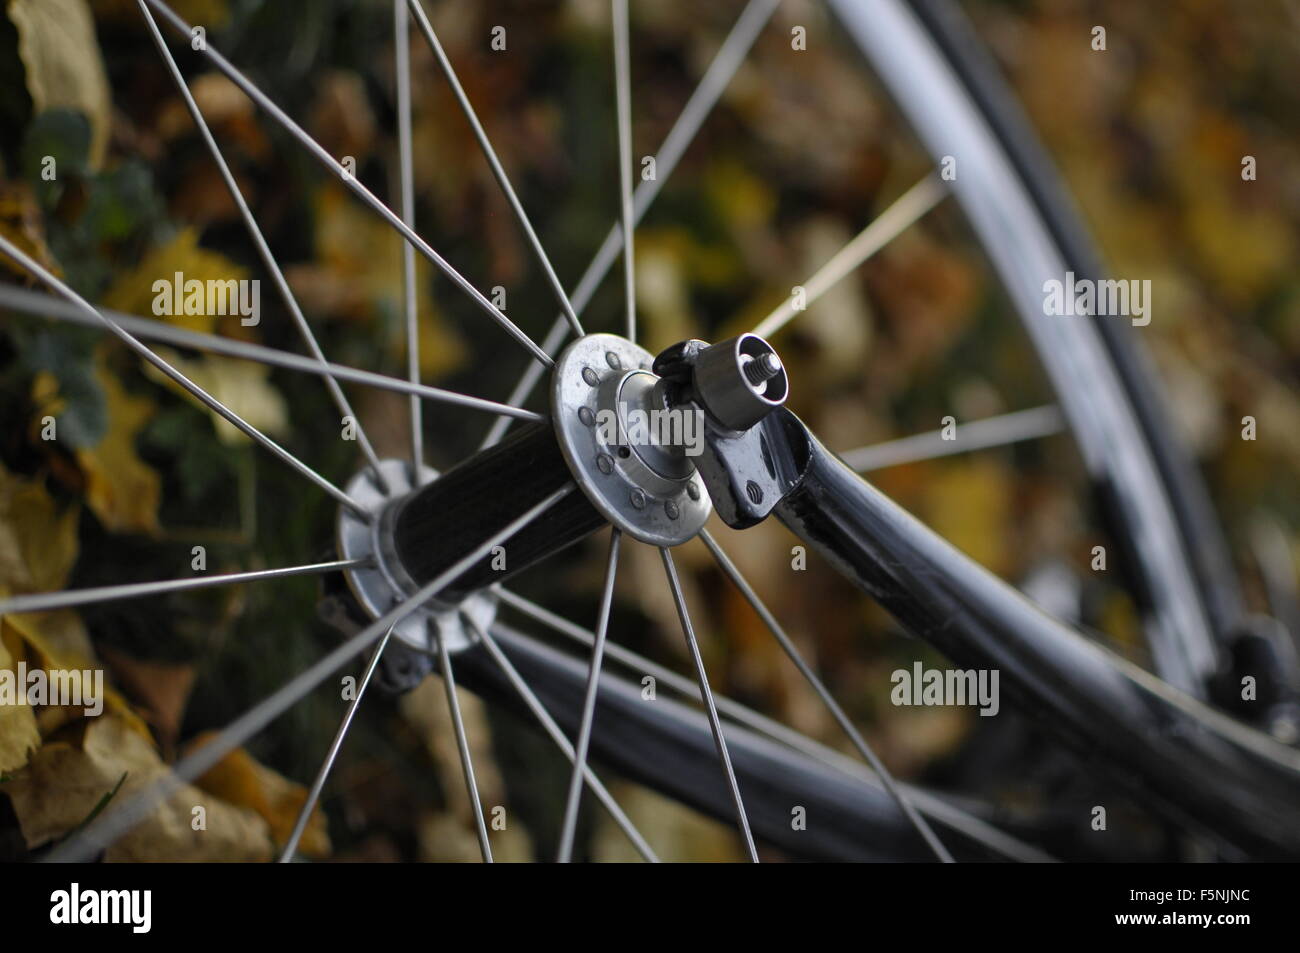 Close up cycle, cycle cross bike wheel, security screw Stock Photo